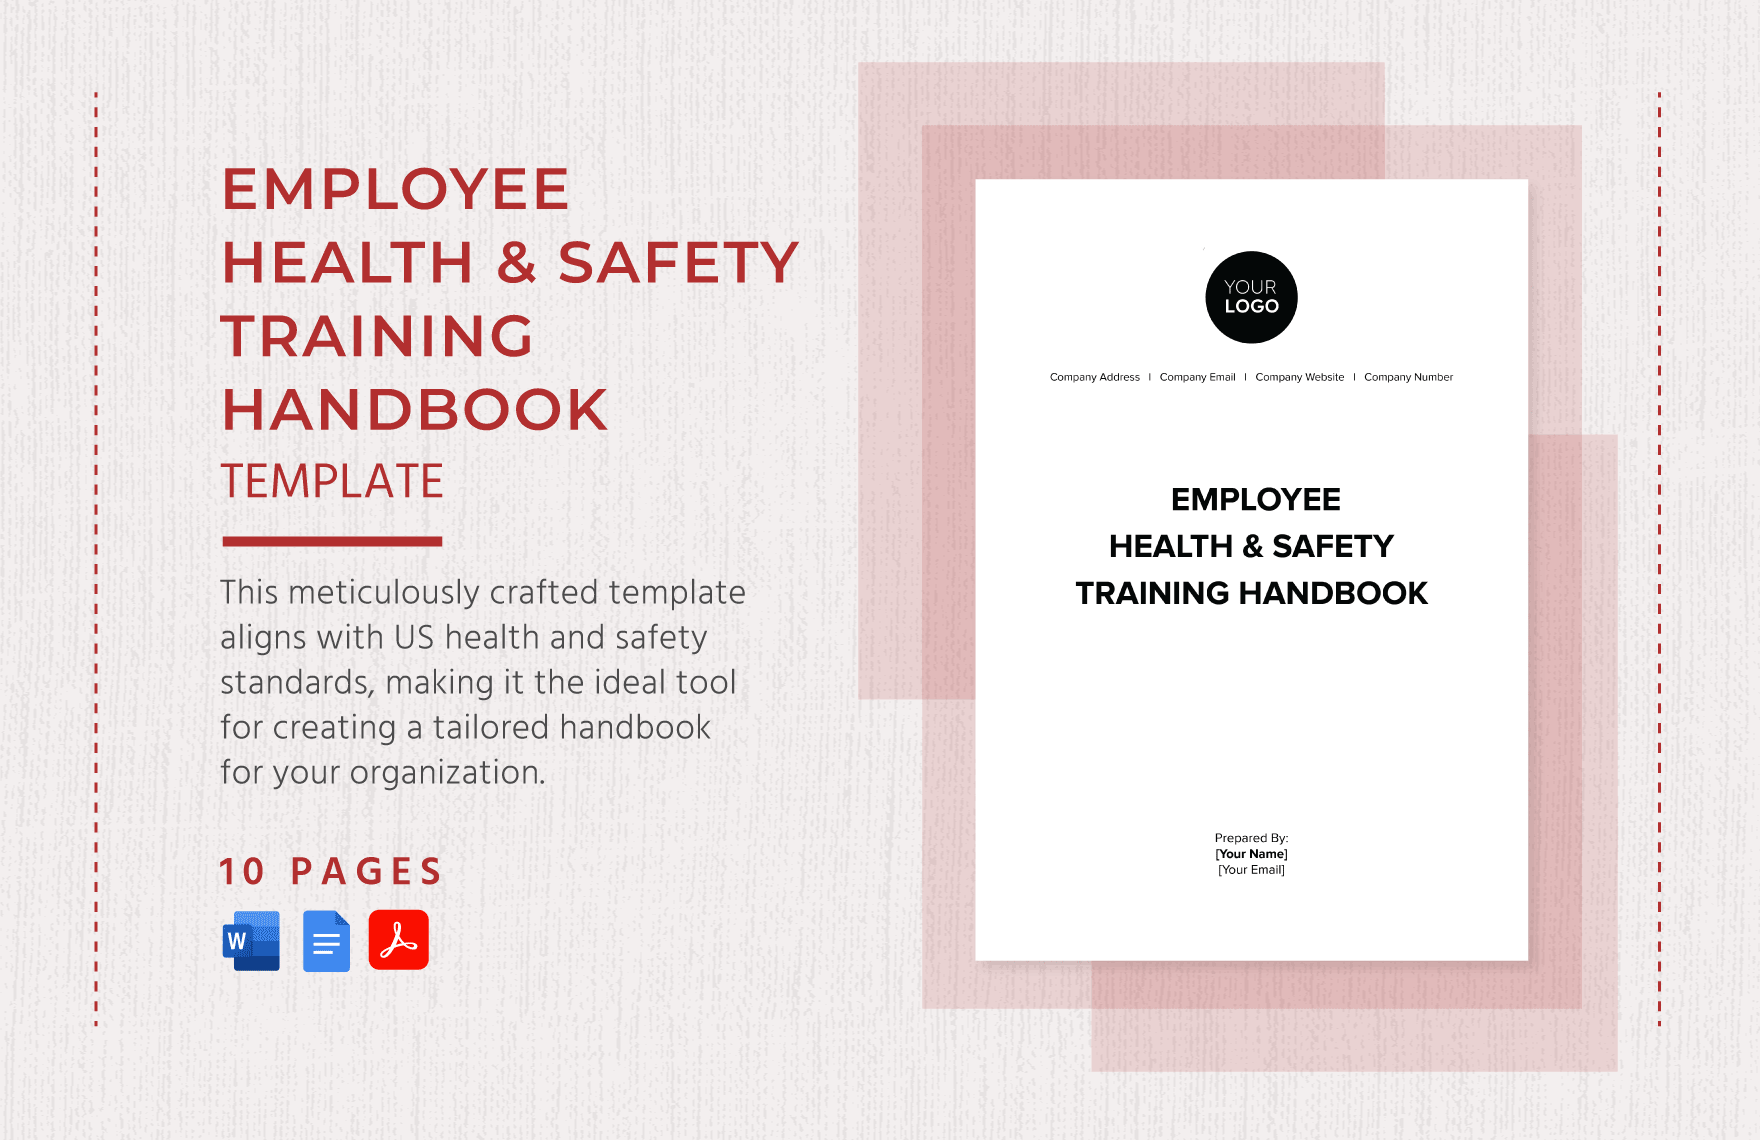 Employee Health & Safety Training Handbook Template in Word, Google Docs, PDF